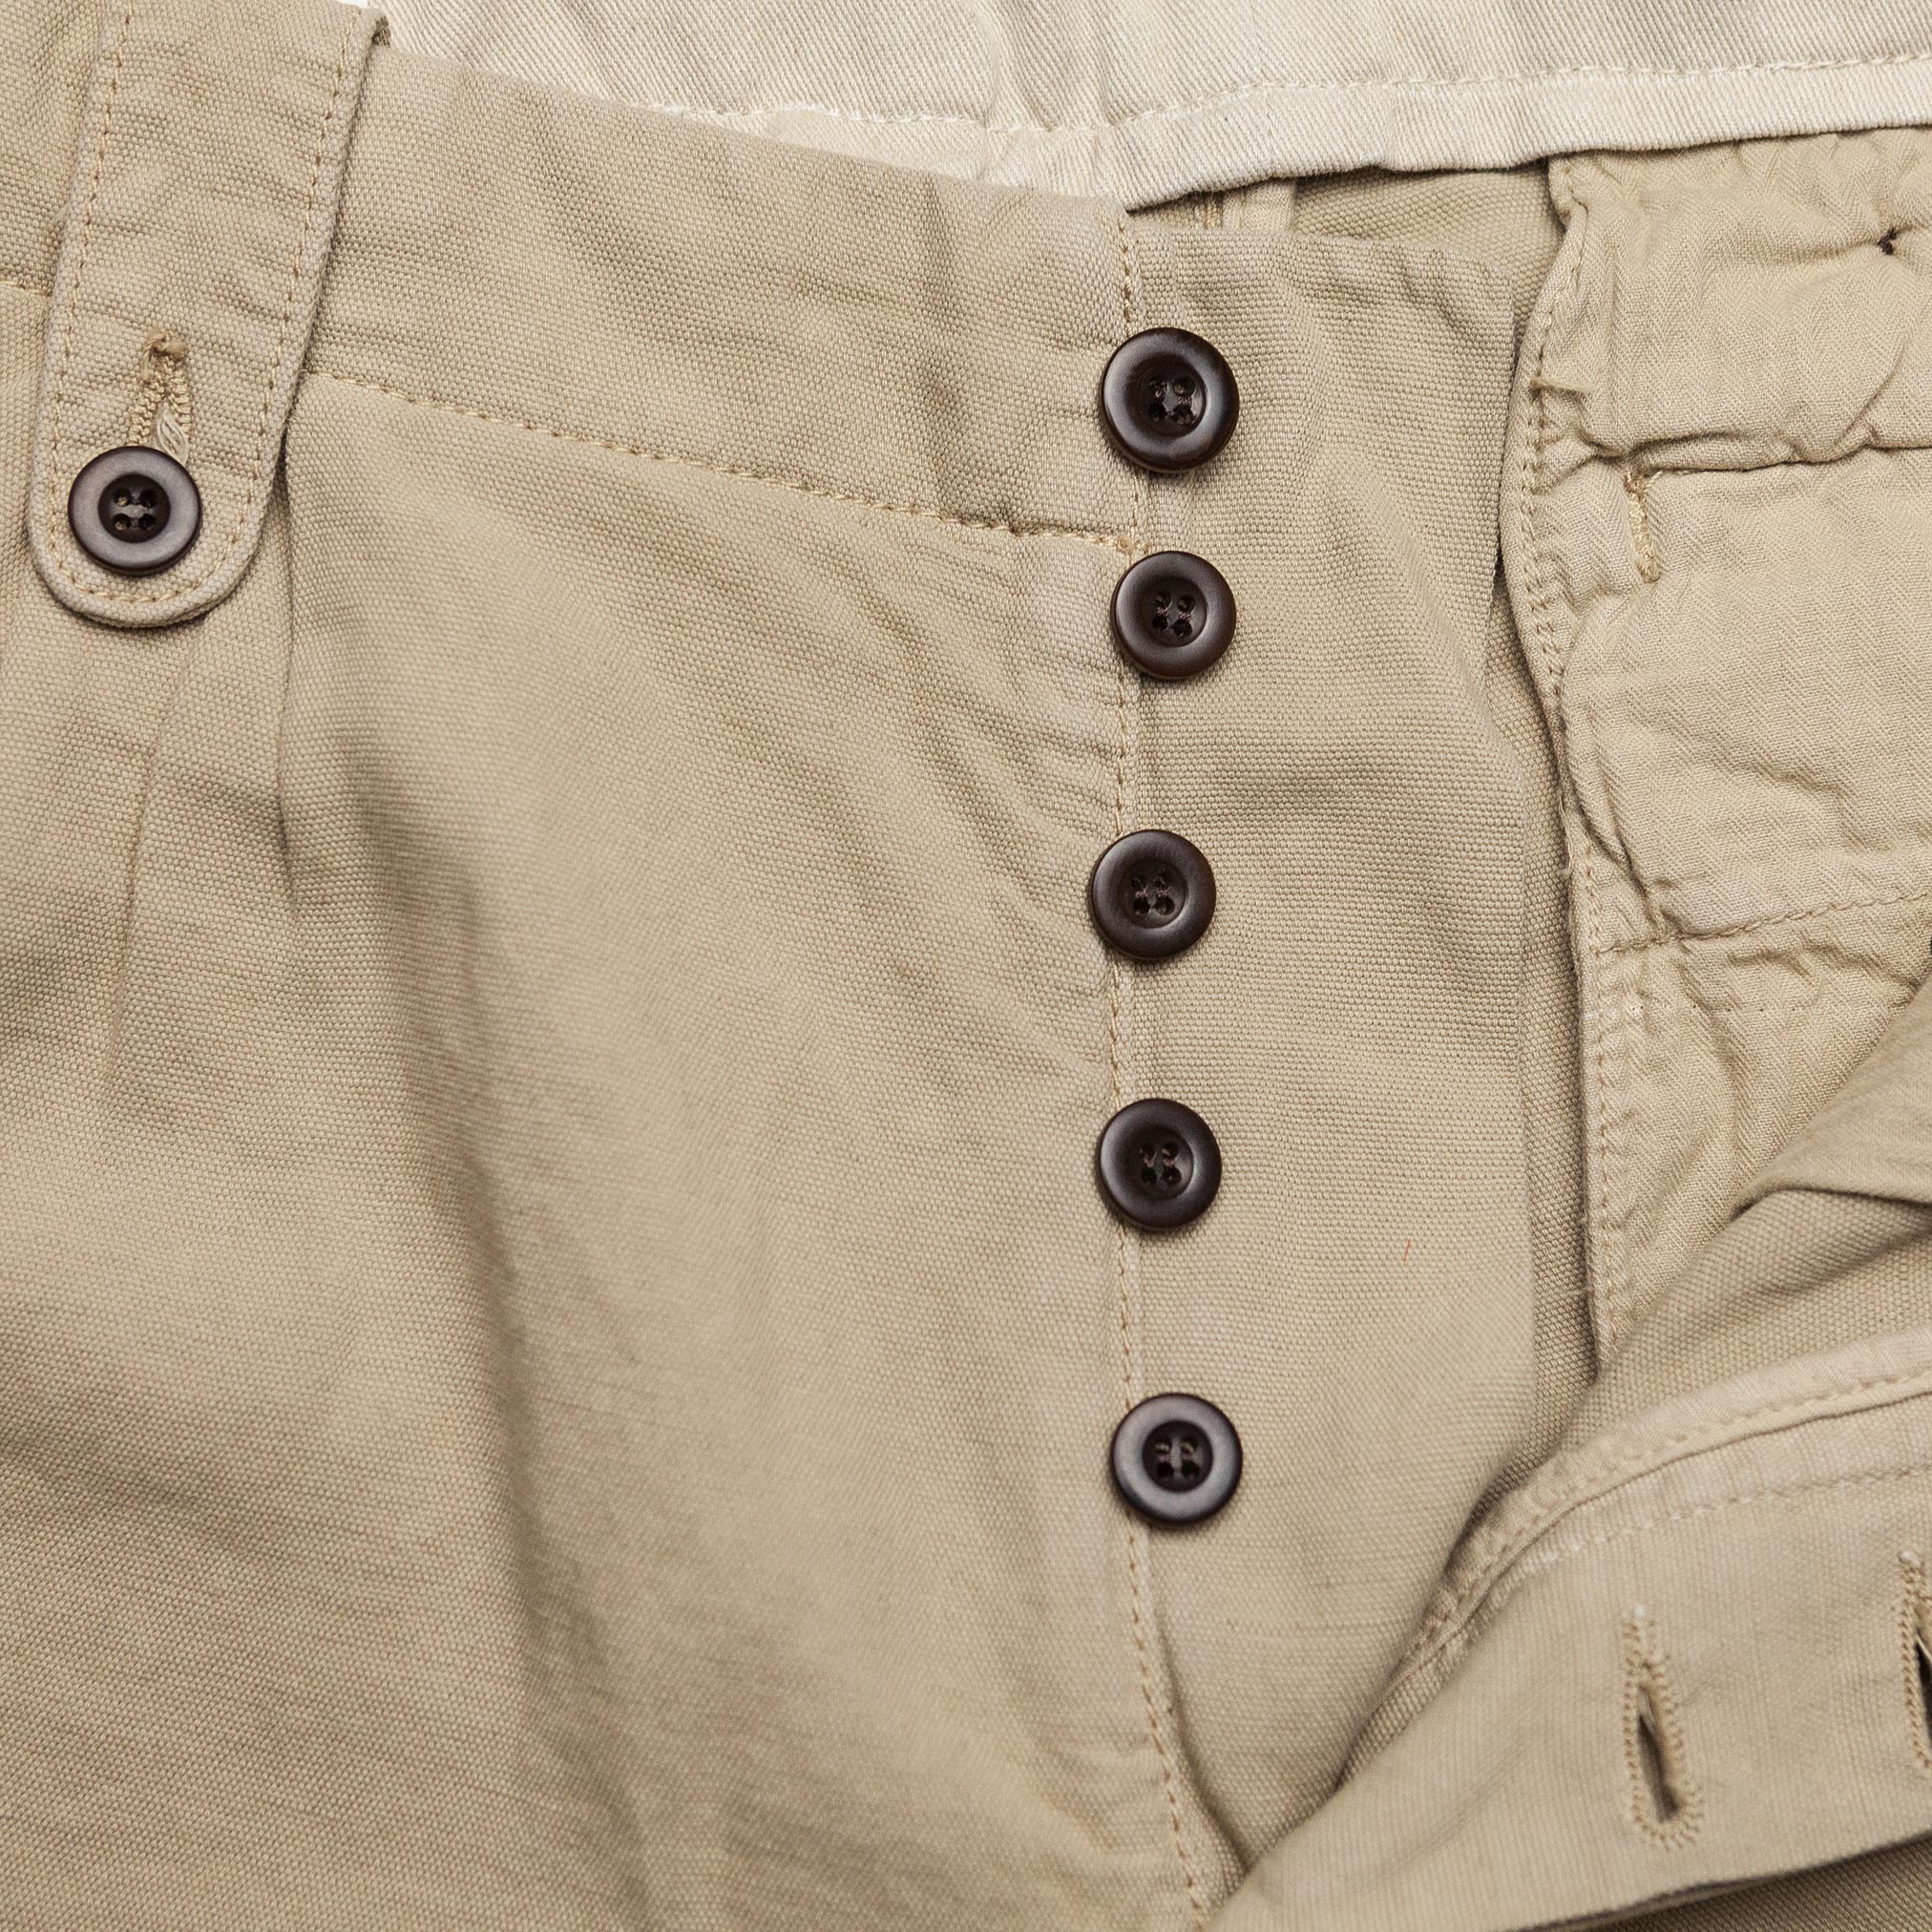 Navarre Cotton & Linen Shorts in Sand